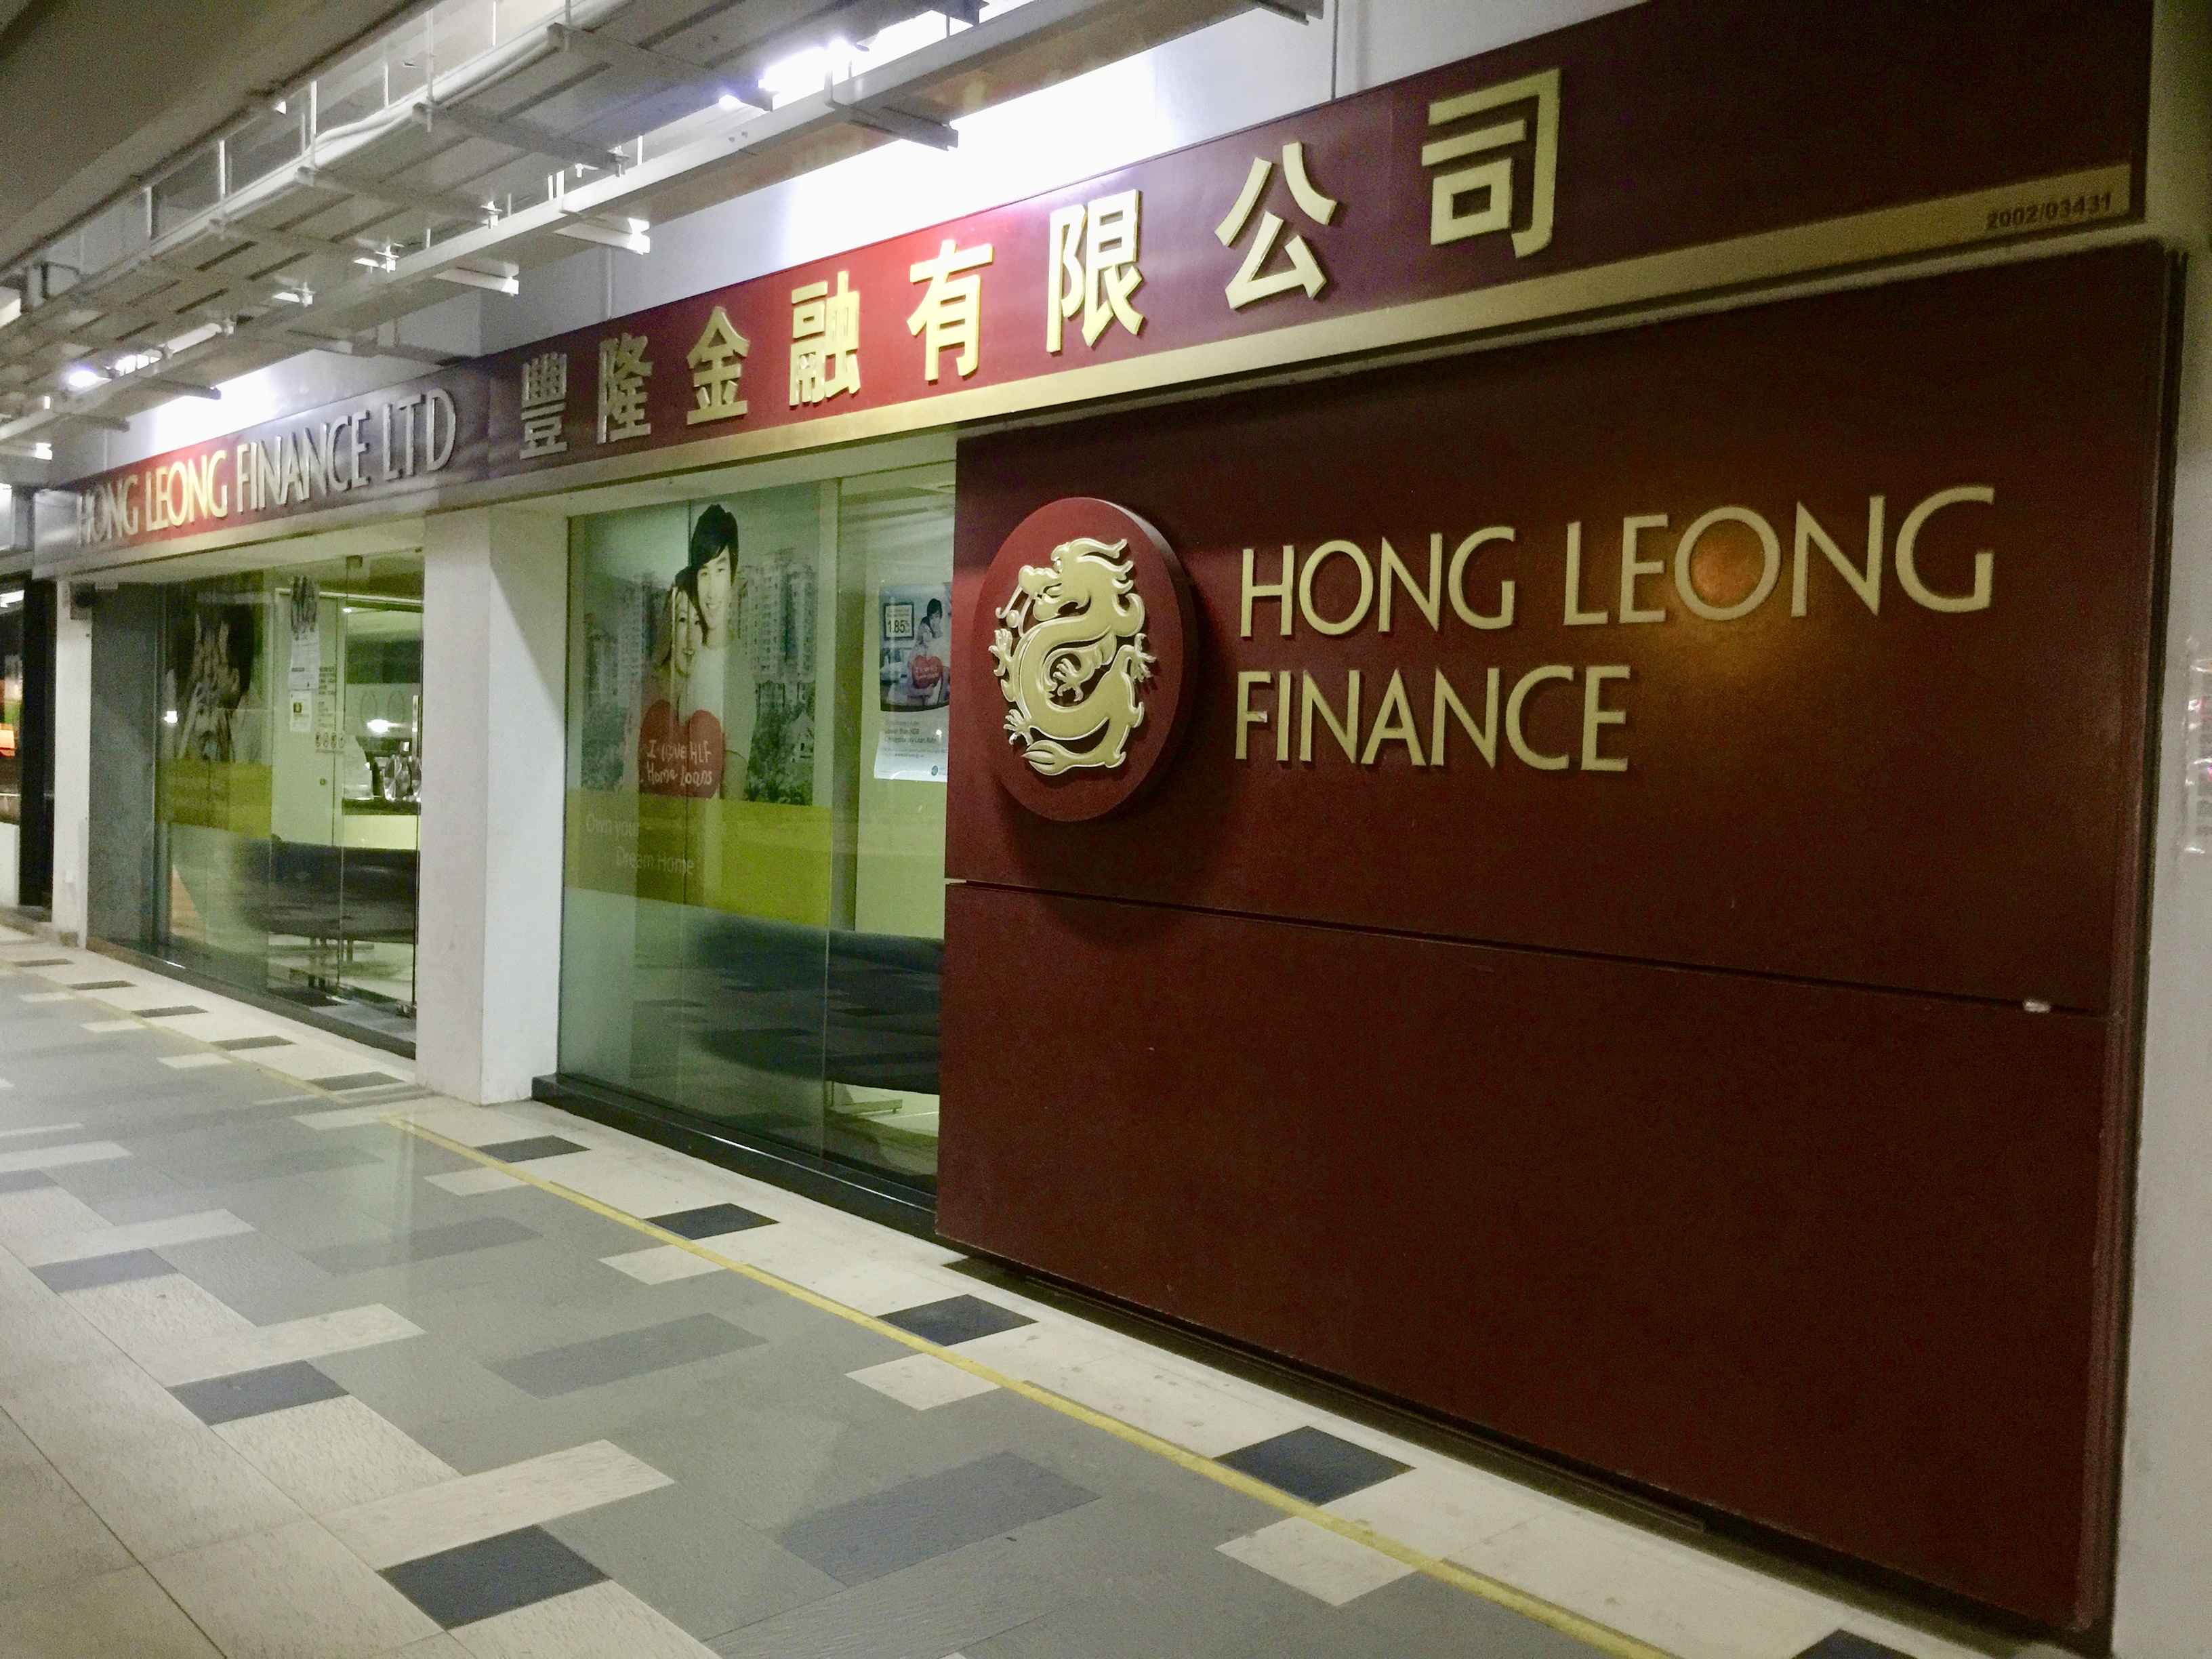 Hong leong finance fixed deposit rates